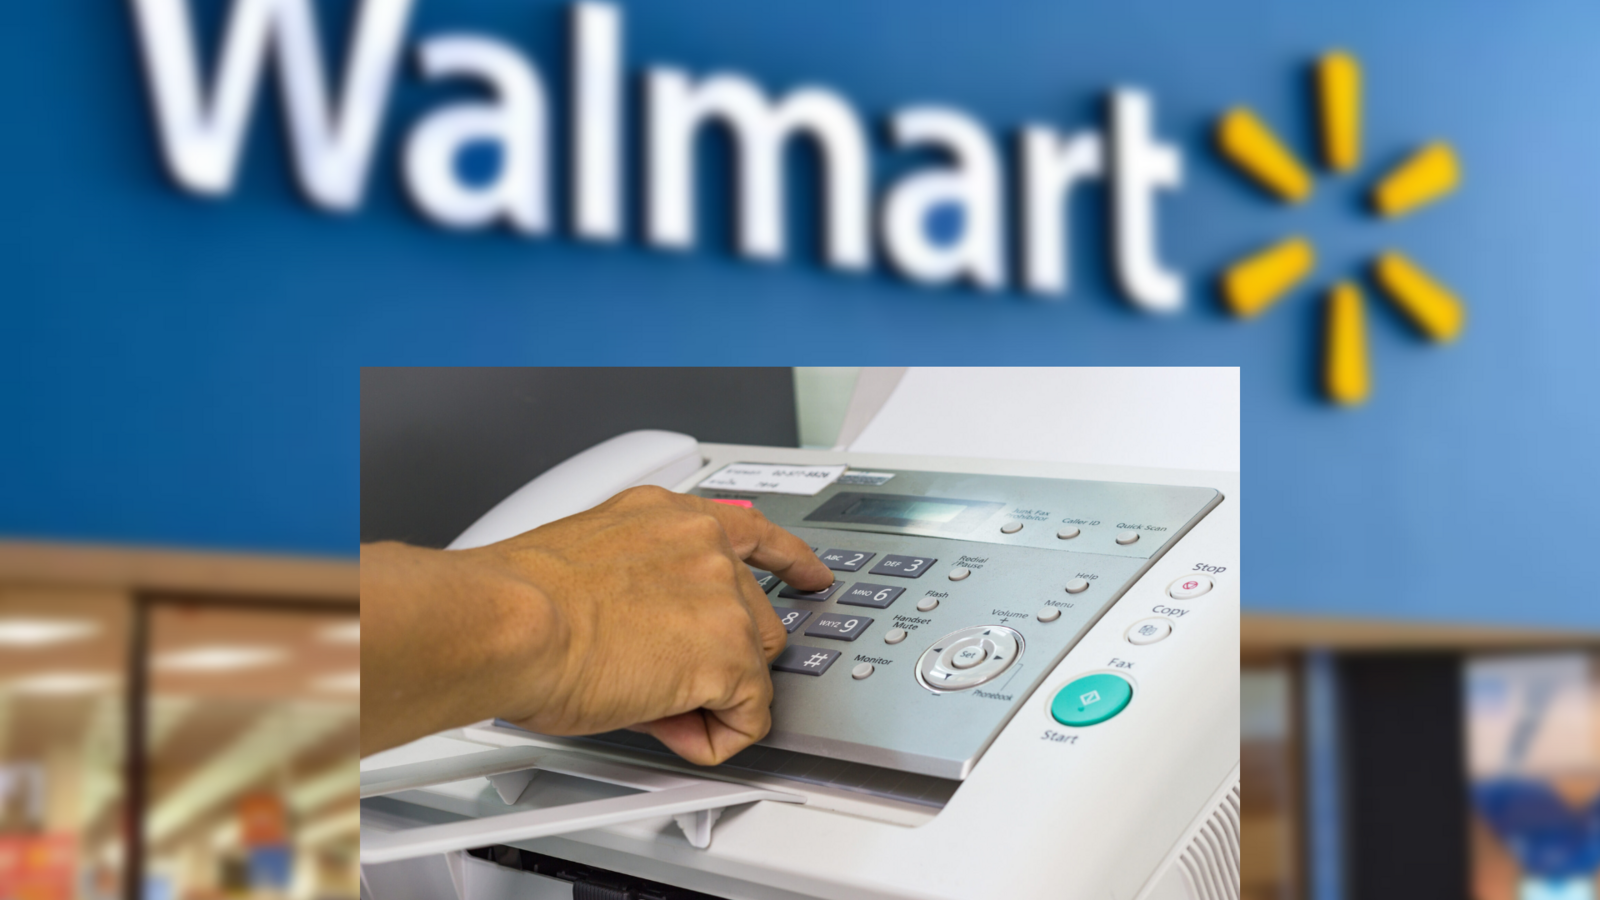 Does Walmart Have a Fax Machine?